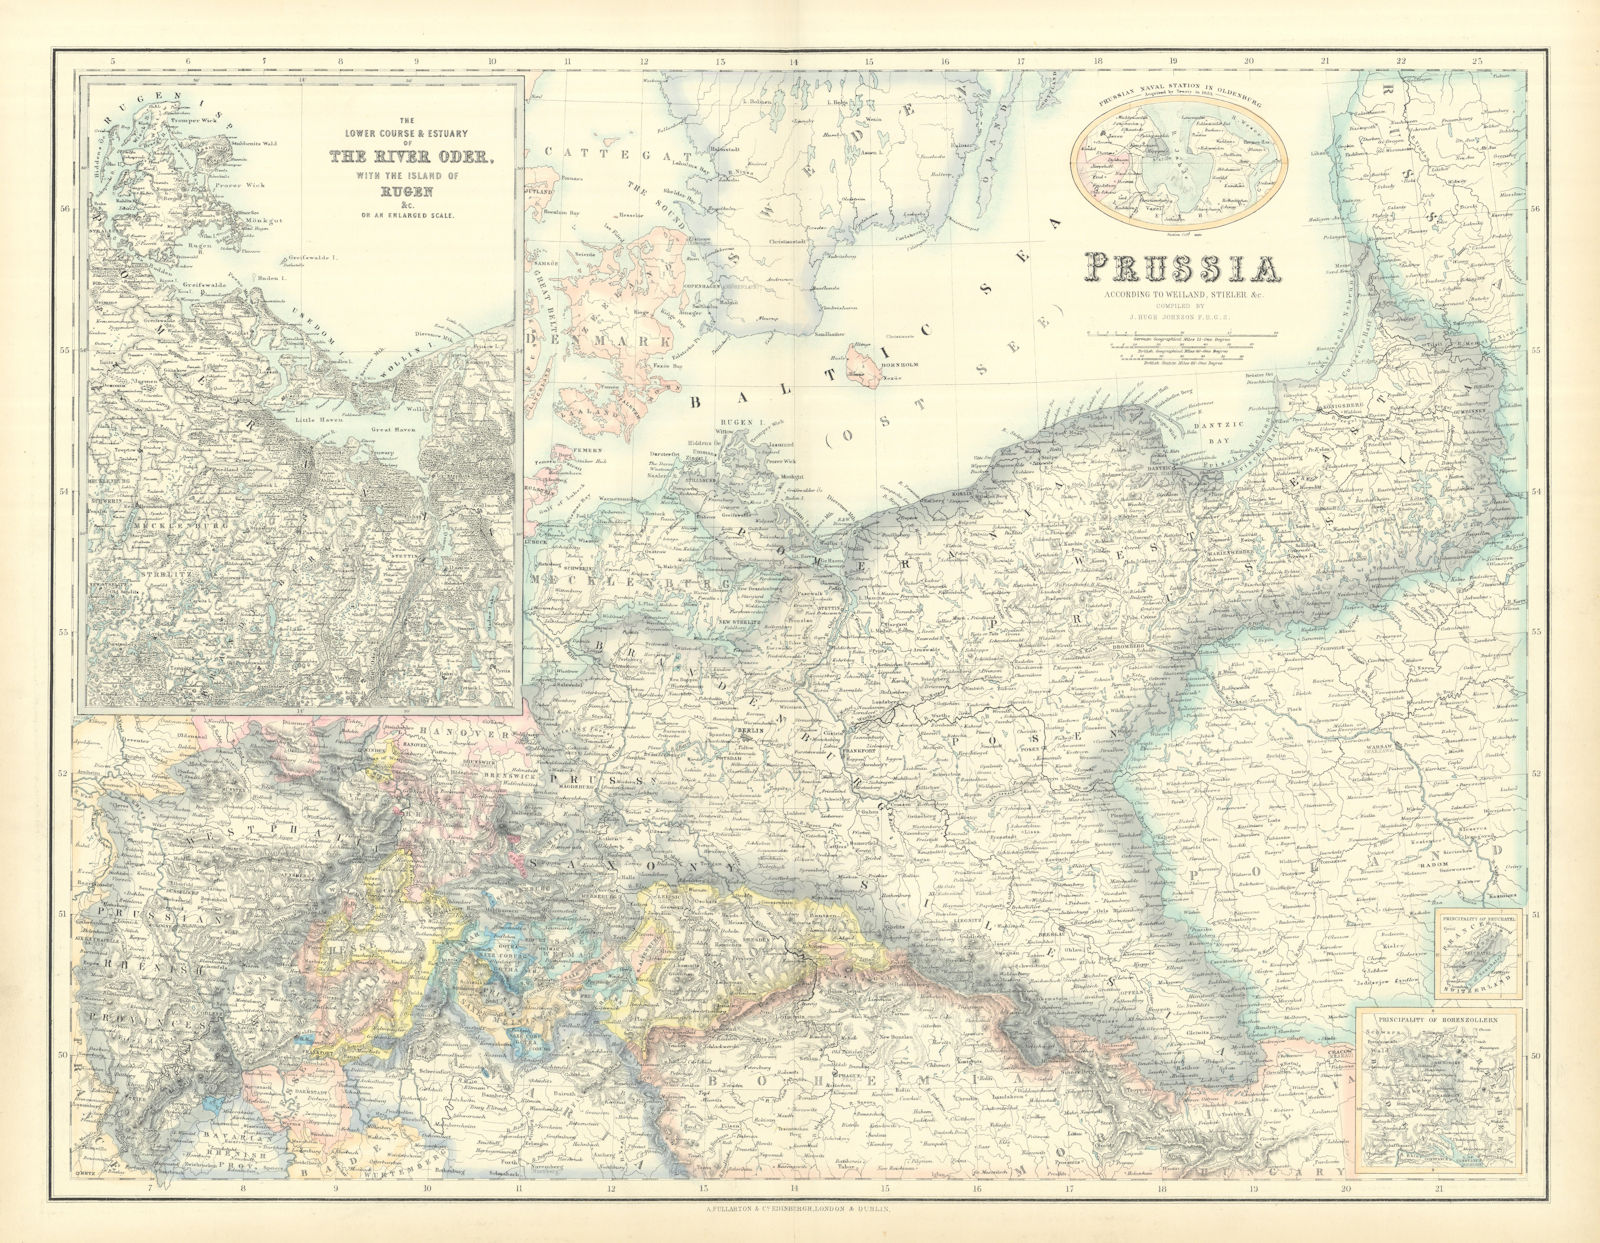 Prussia. Oder estuary & Rugen. Eastern Germany & Poland. SWANSTON 1860 old map